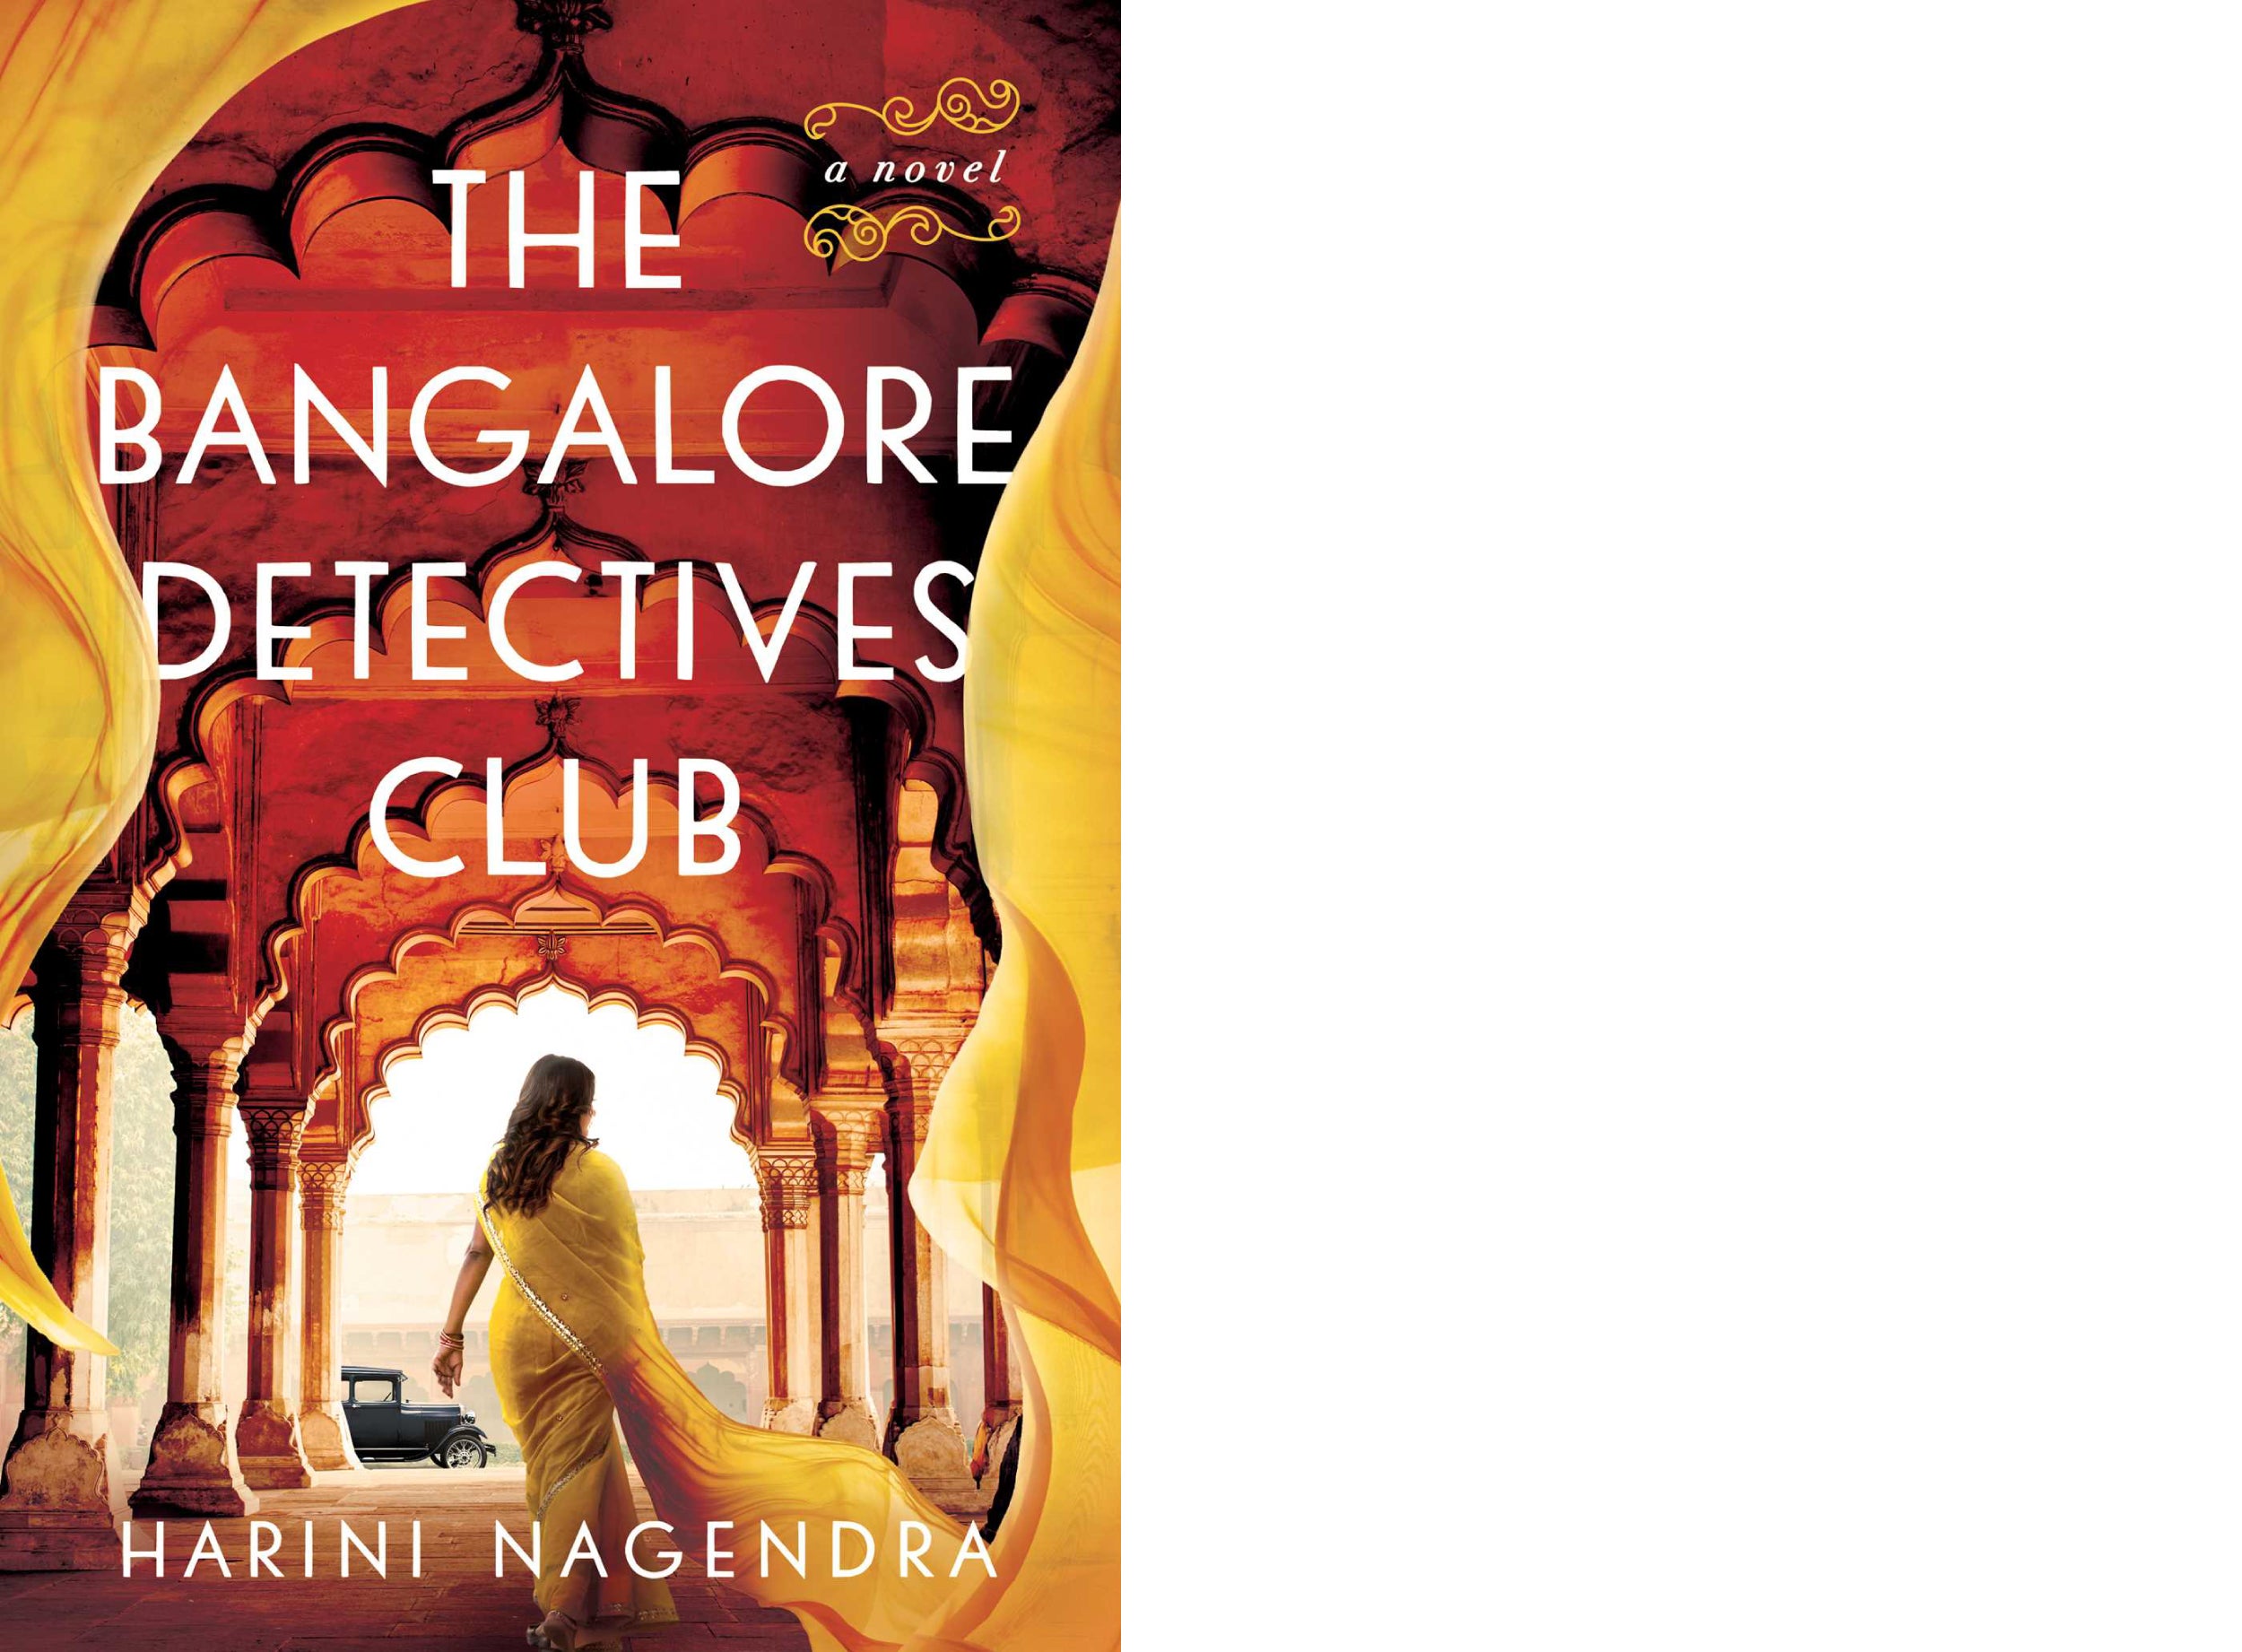 Book cover: "Bangalore Detectives Club."